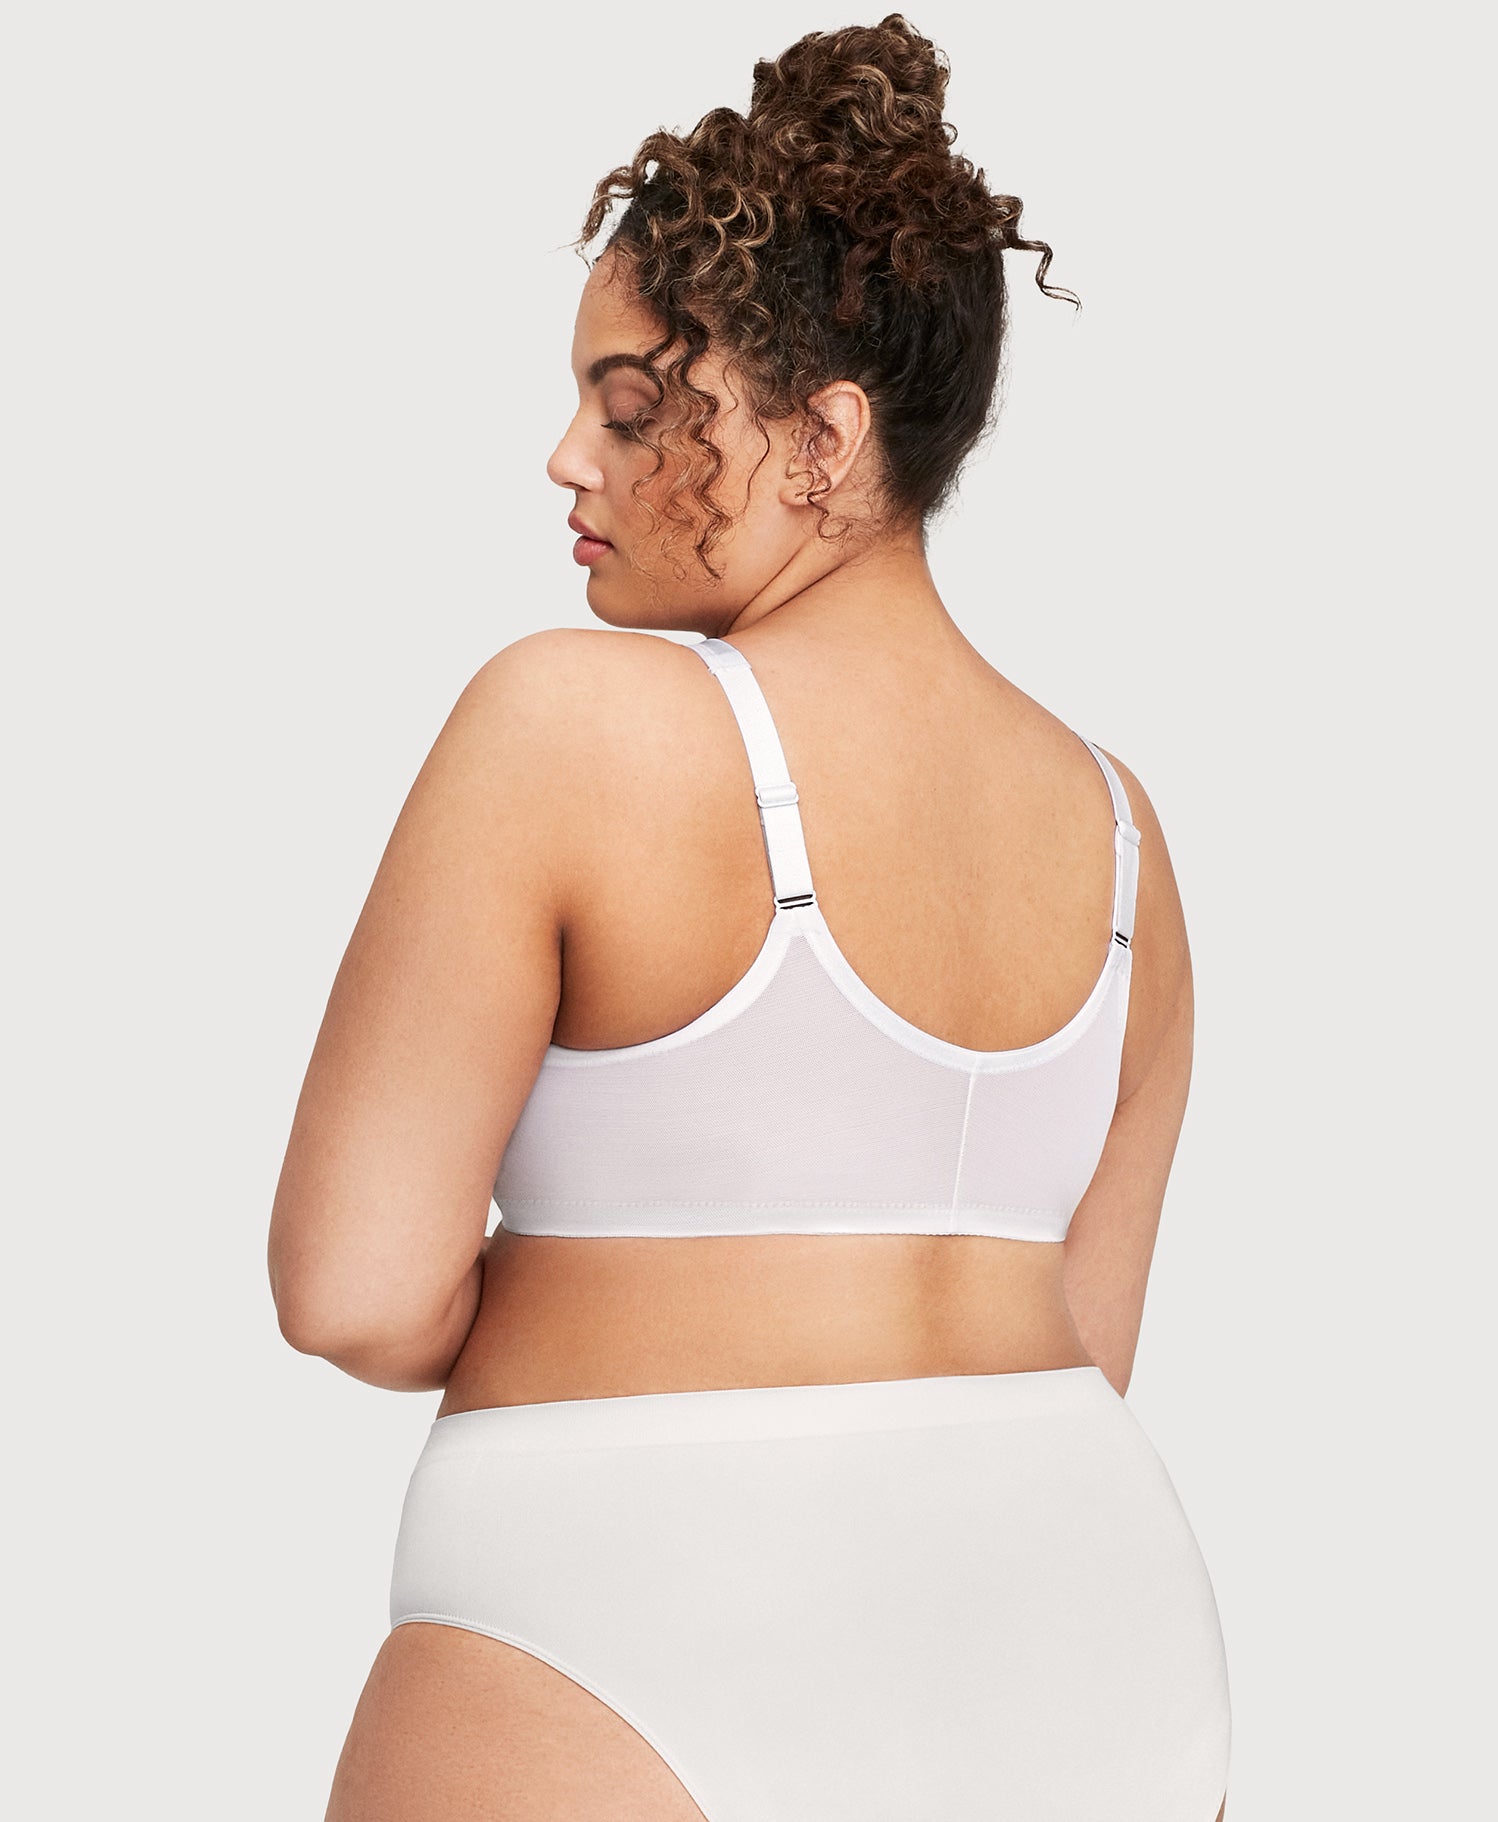 Glamorise Women's Plus-Size Complete Comfort Cotton T-Back Bra, White, 38DD/F